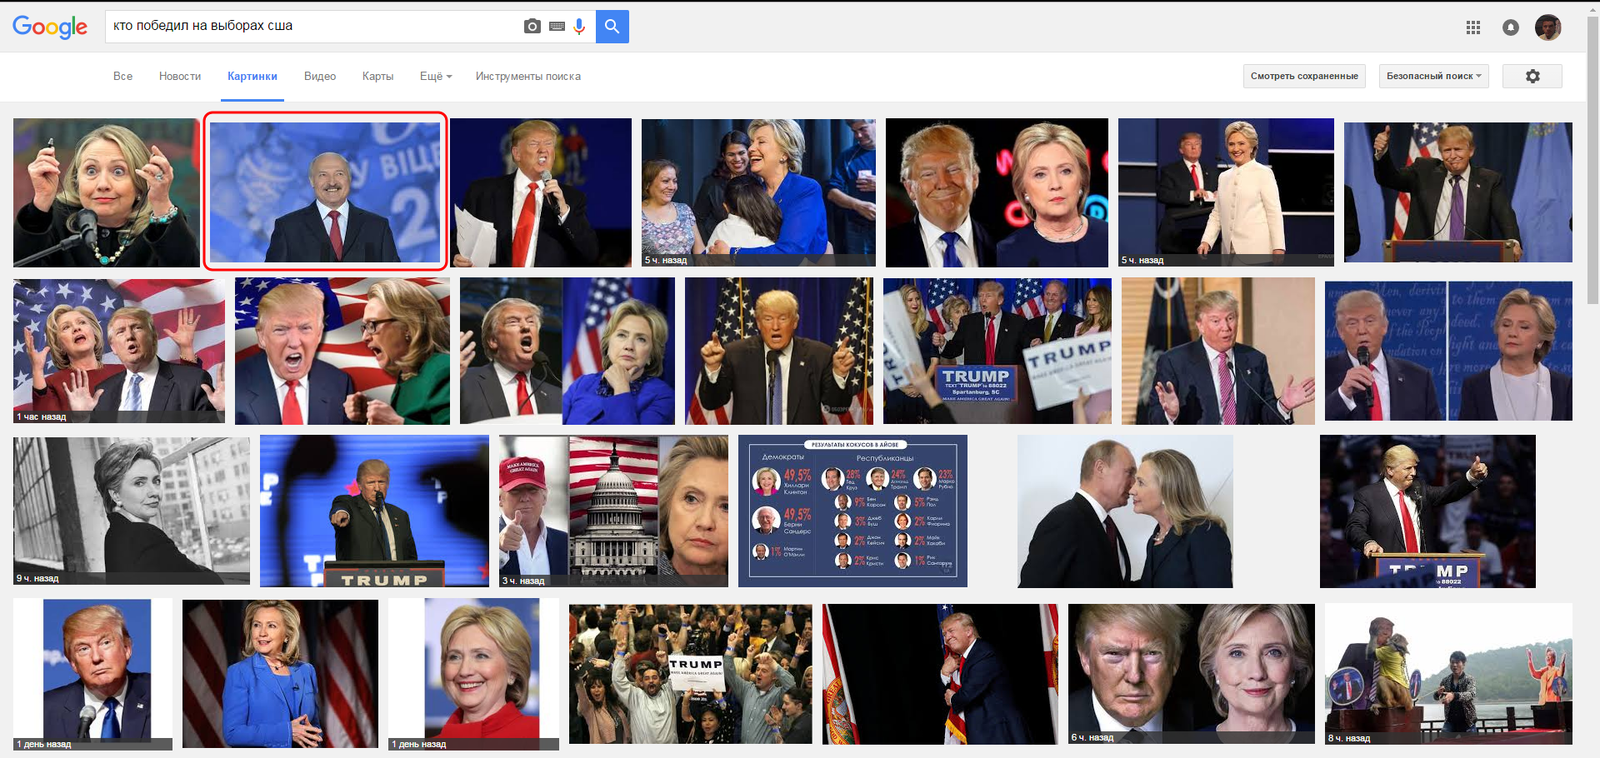 Who won the US elections? - Elections, USA, Donald Trump, Clinton, Alexander Lukashenko, Daddy, Bill clinton